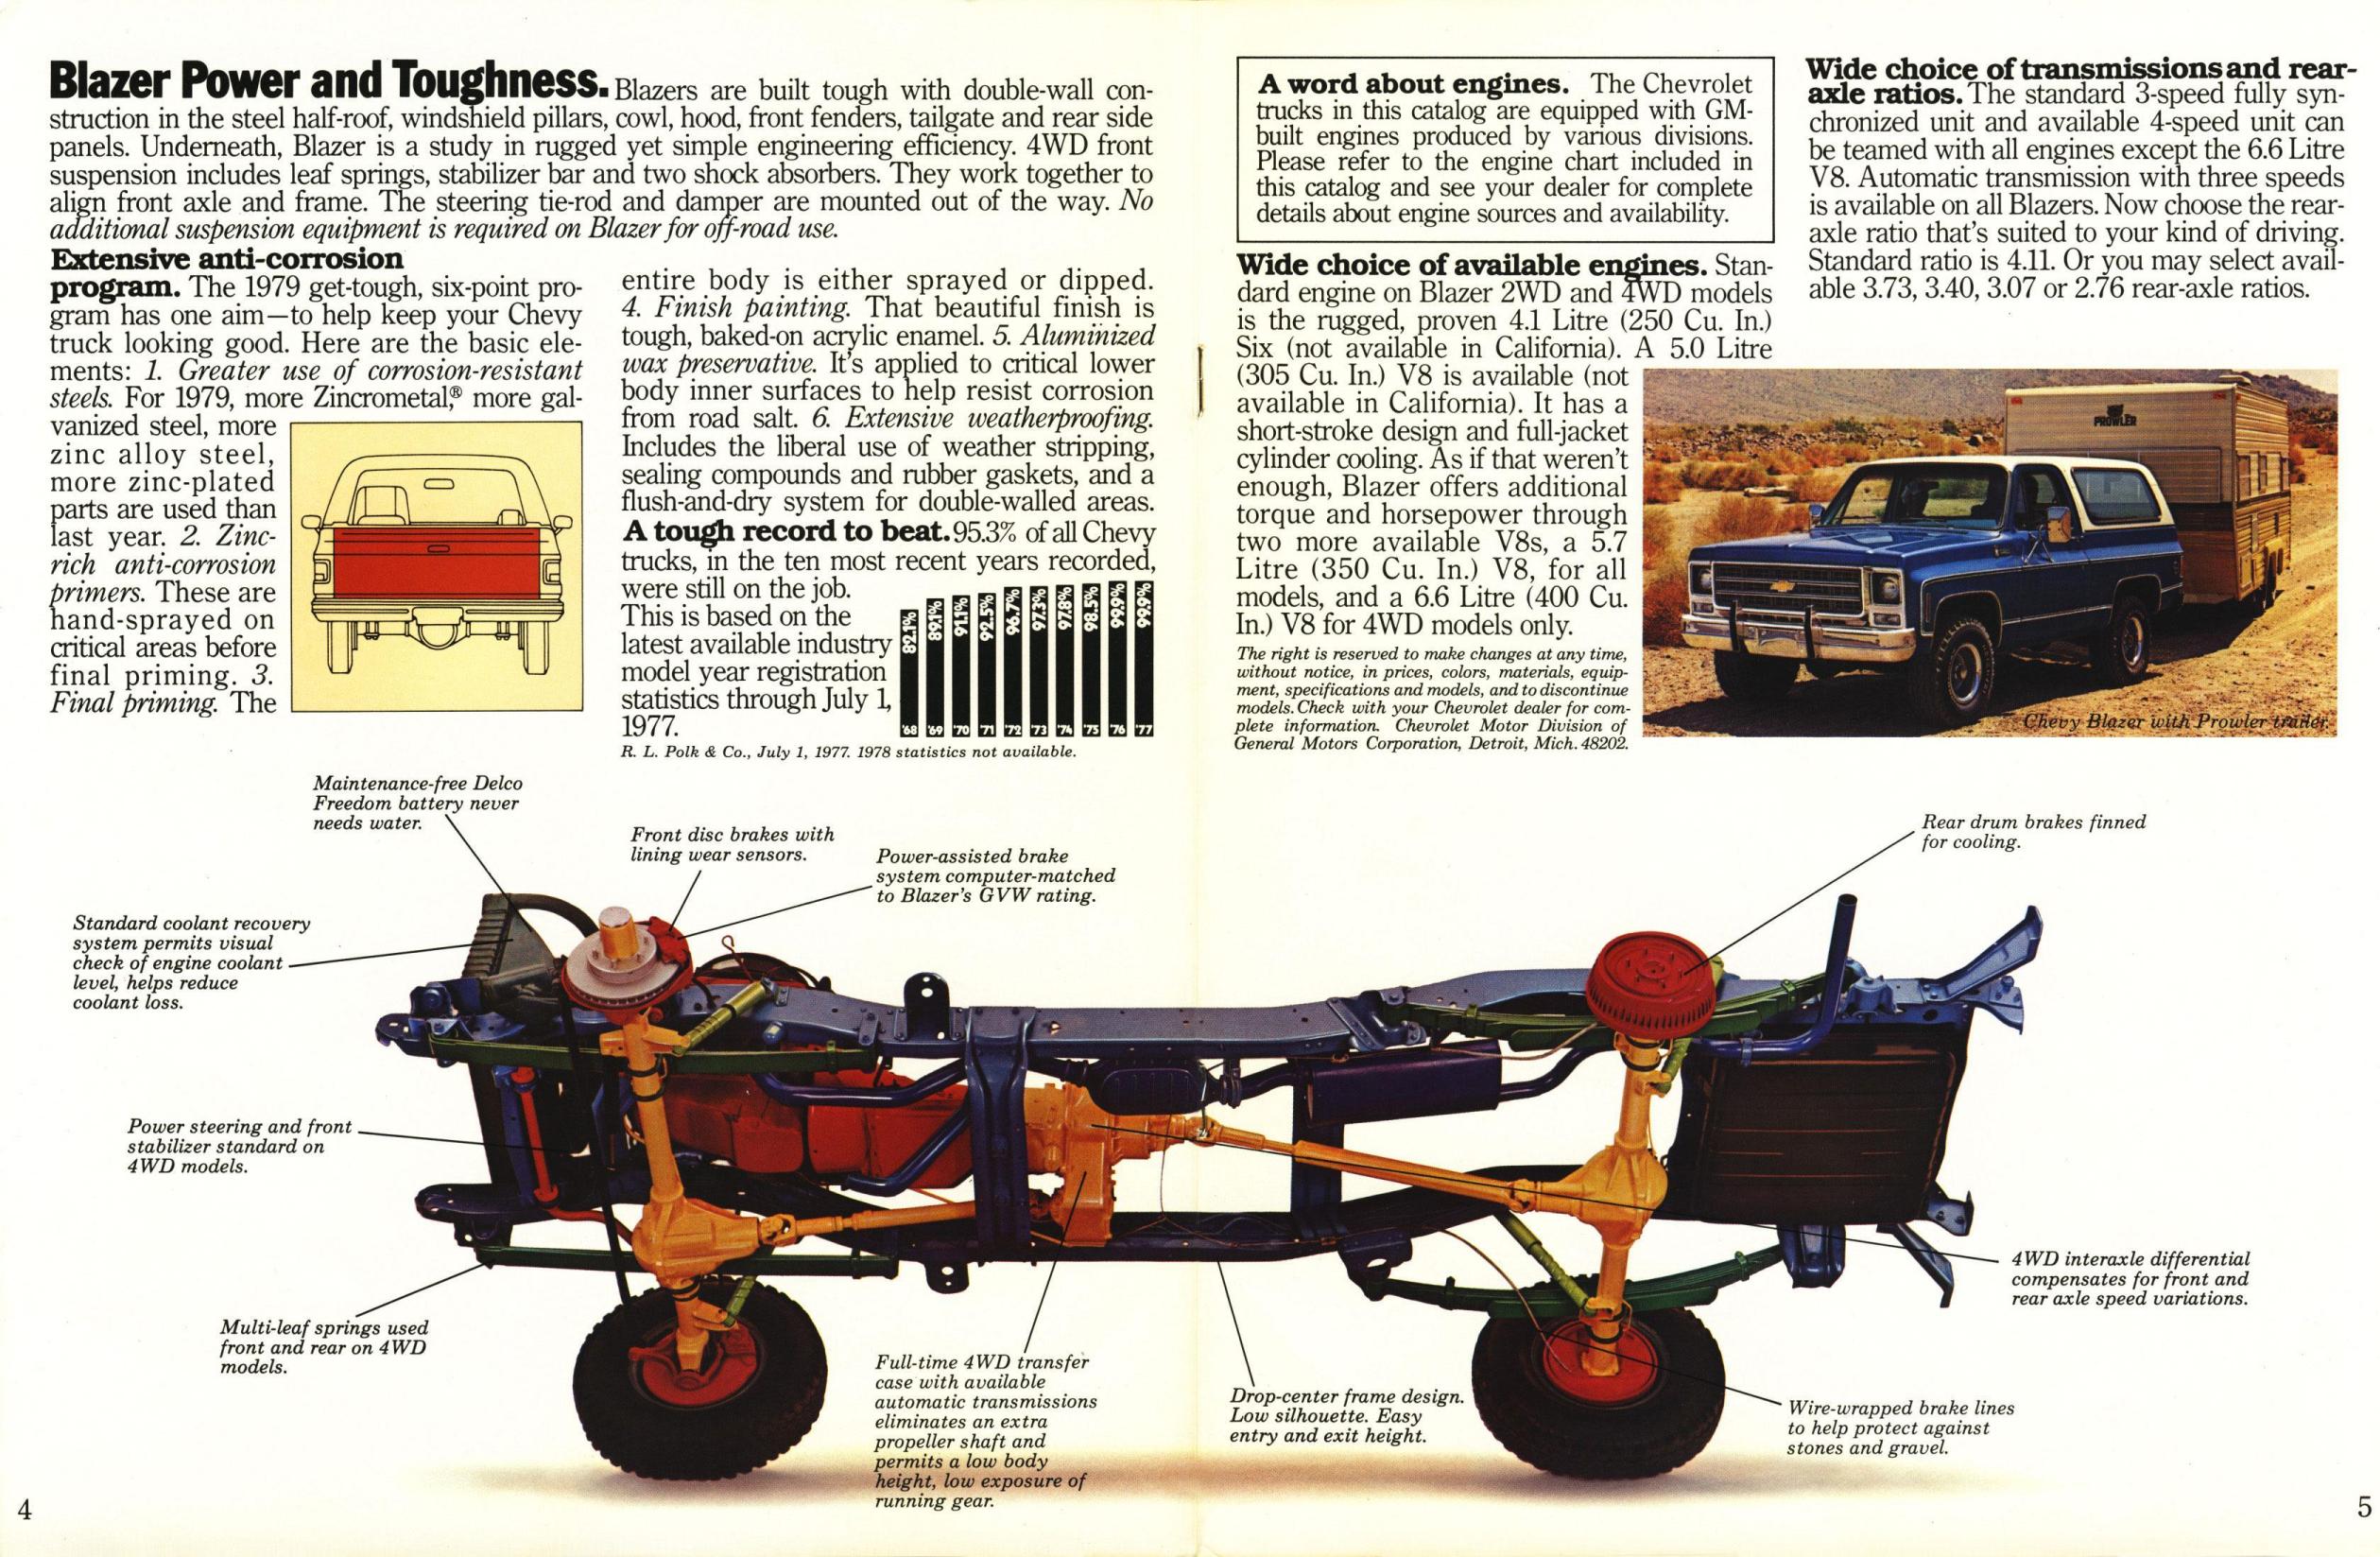 1979 Chevrolet Blazer Brochure Page 5